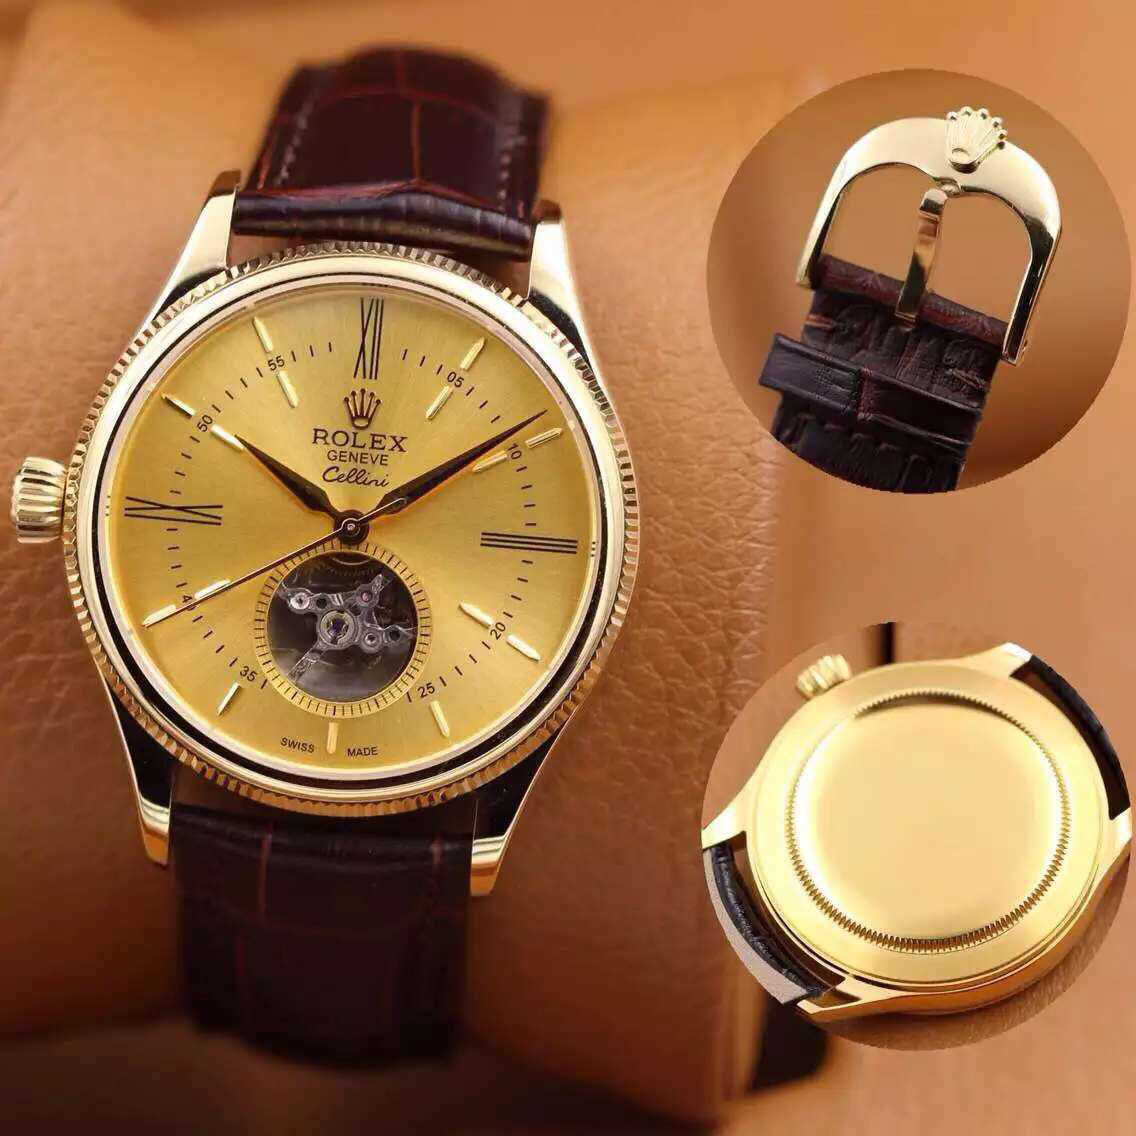 3A勞力士 Rolex 國際影帝周瑞發代言新款透底版陀飛輪腕錶 搭載鏤空2824機芯 高雅和復古之間的融合